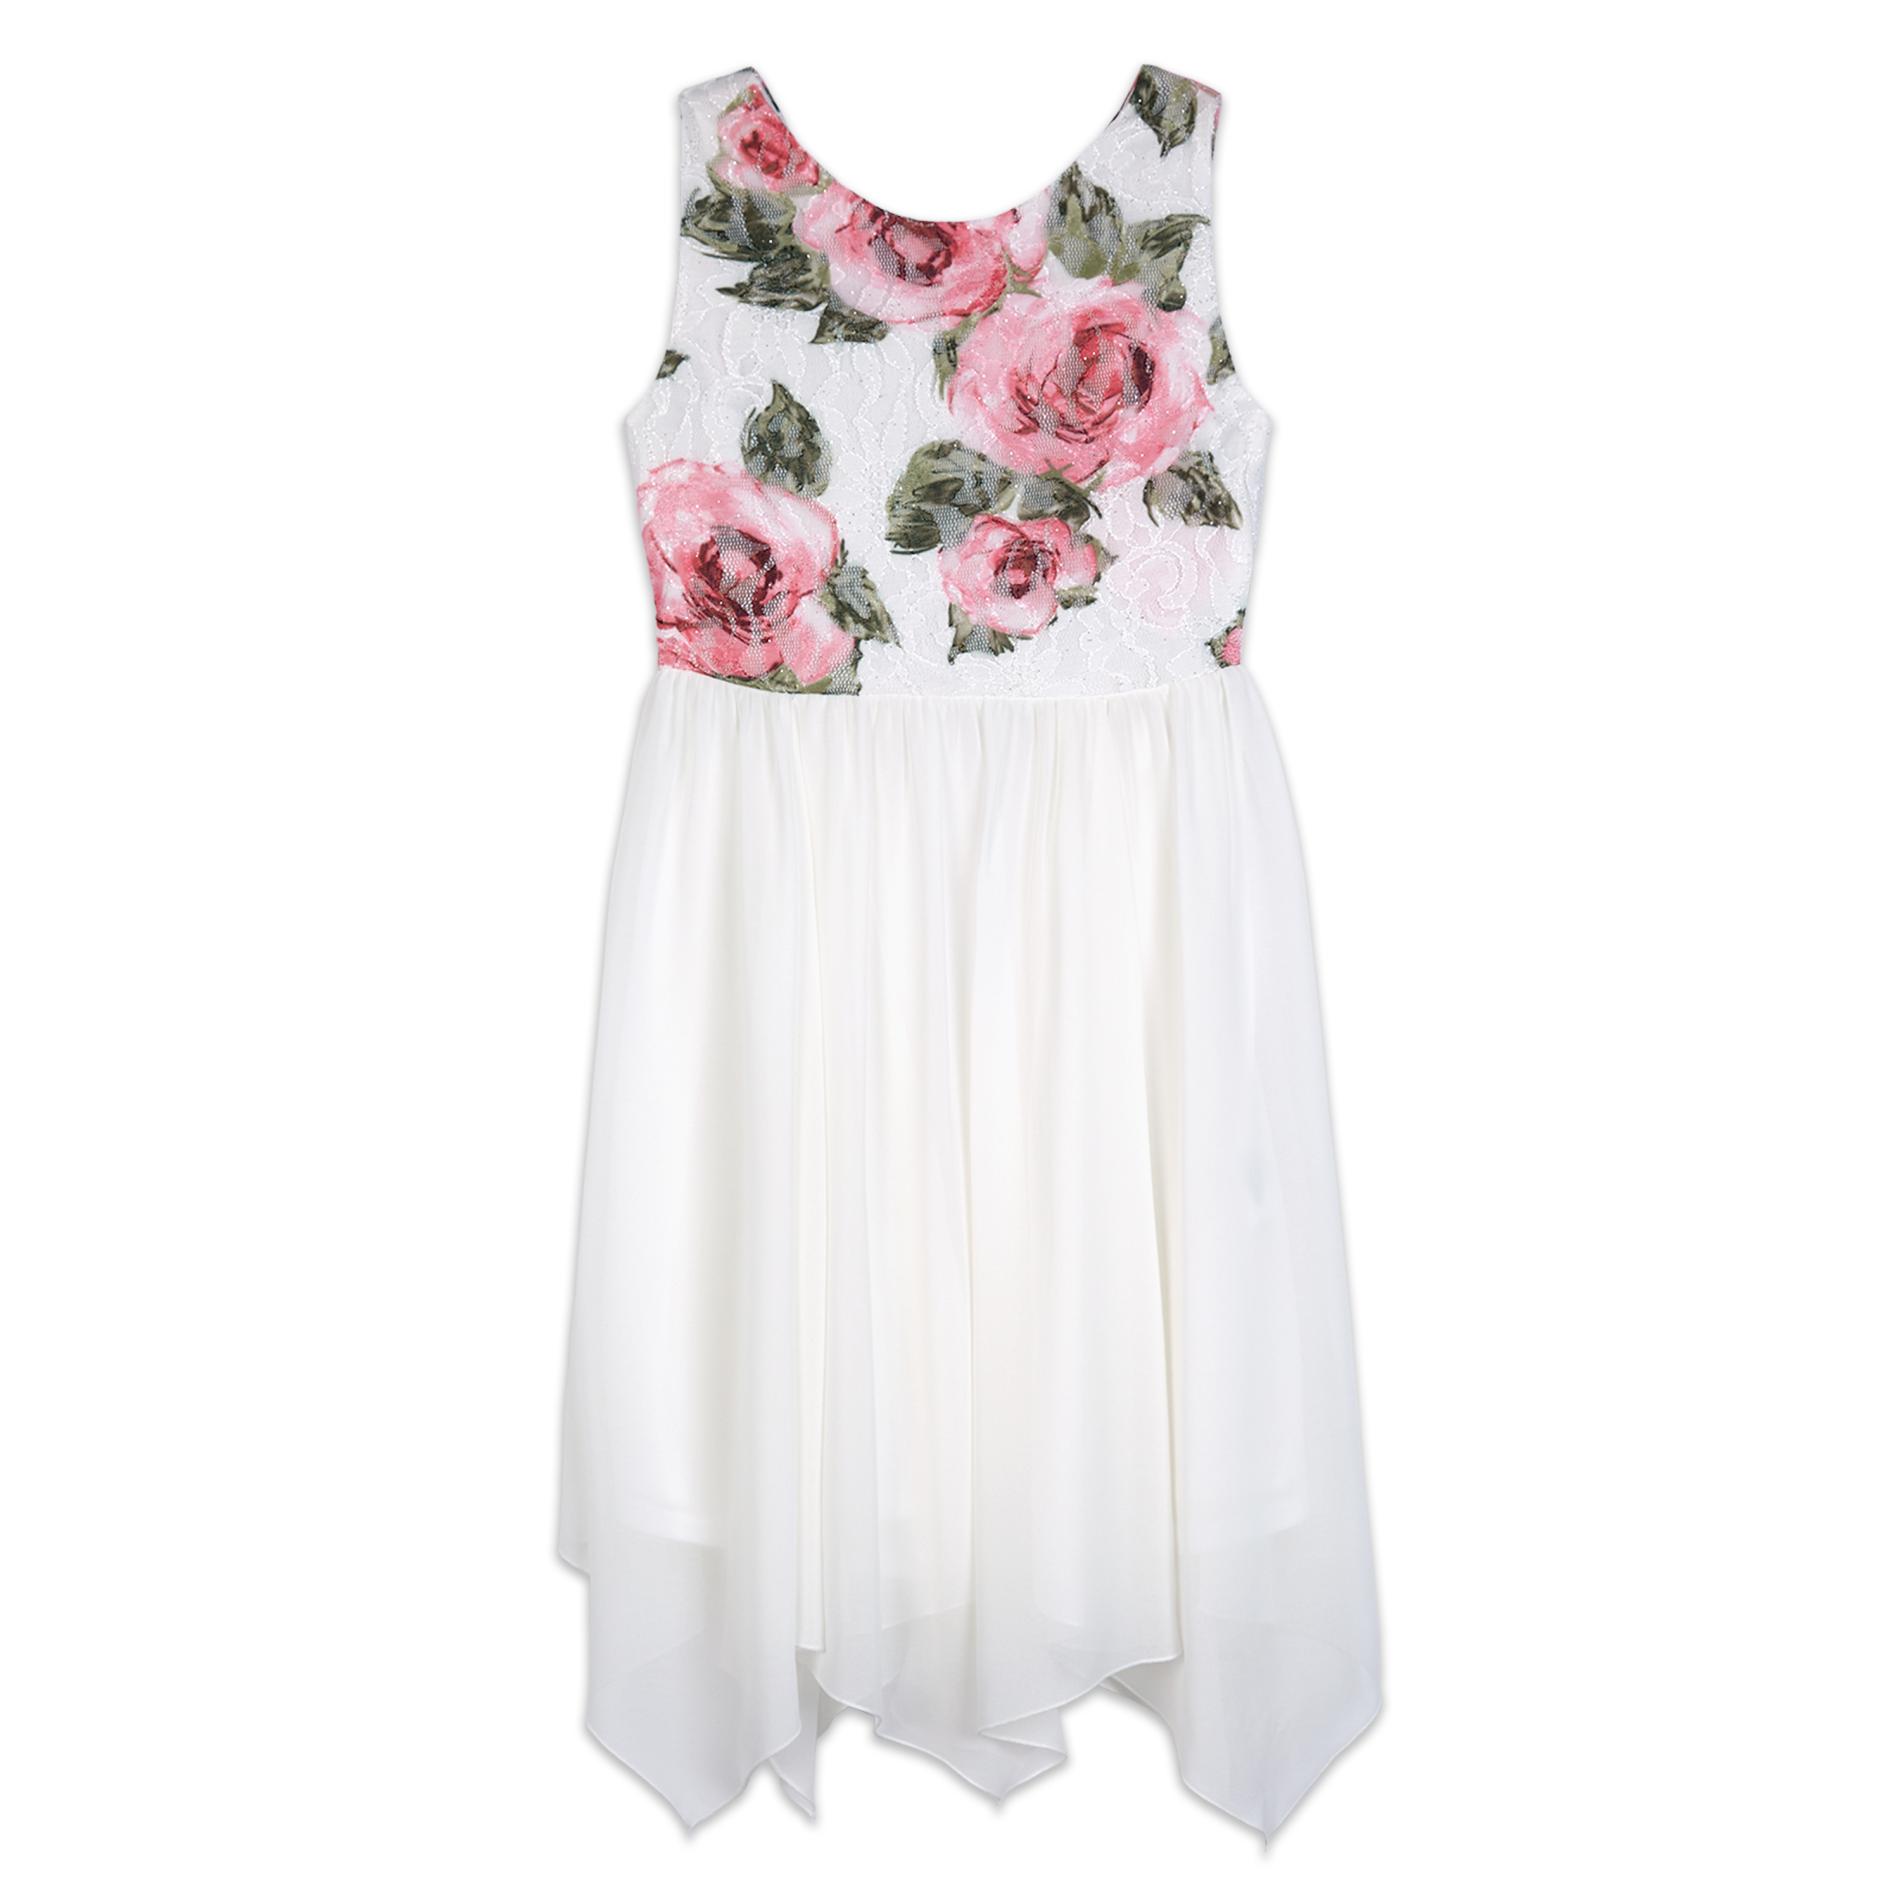 Amy's Closet Girls' Sleeveless Occasion Dress - Floral